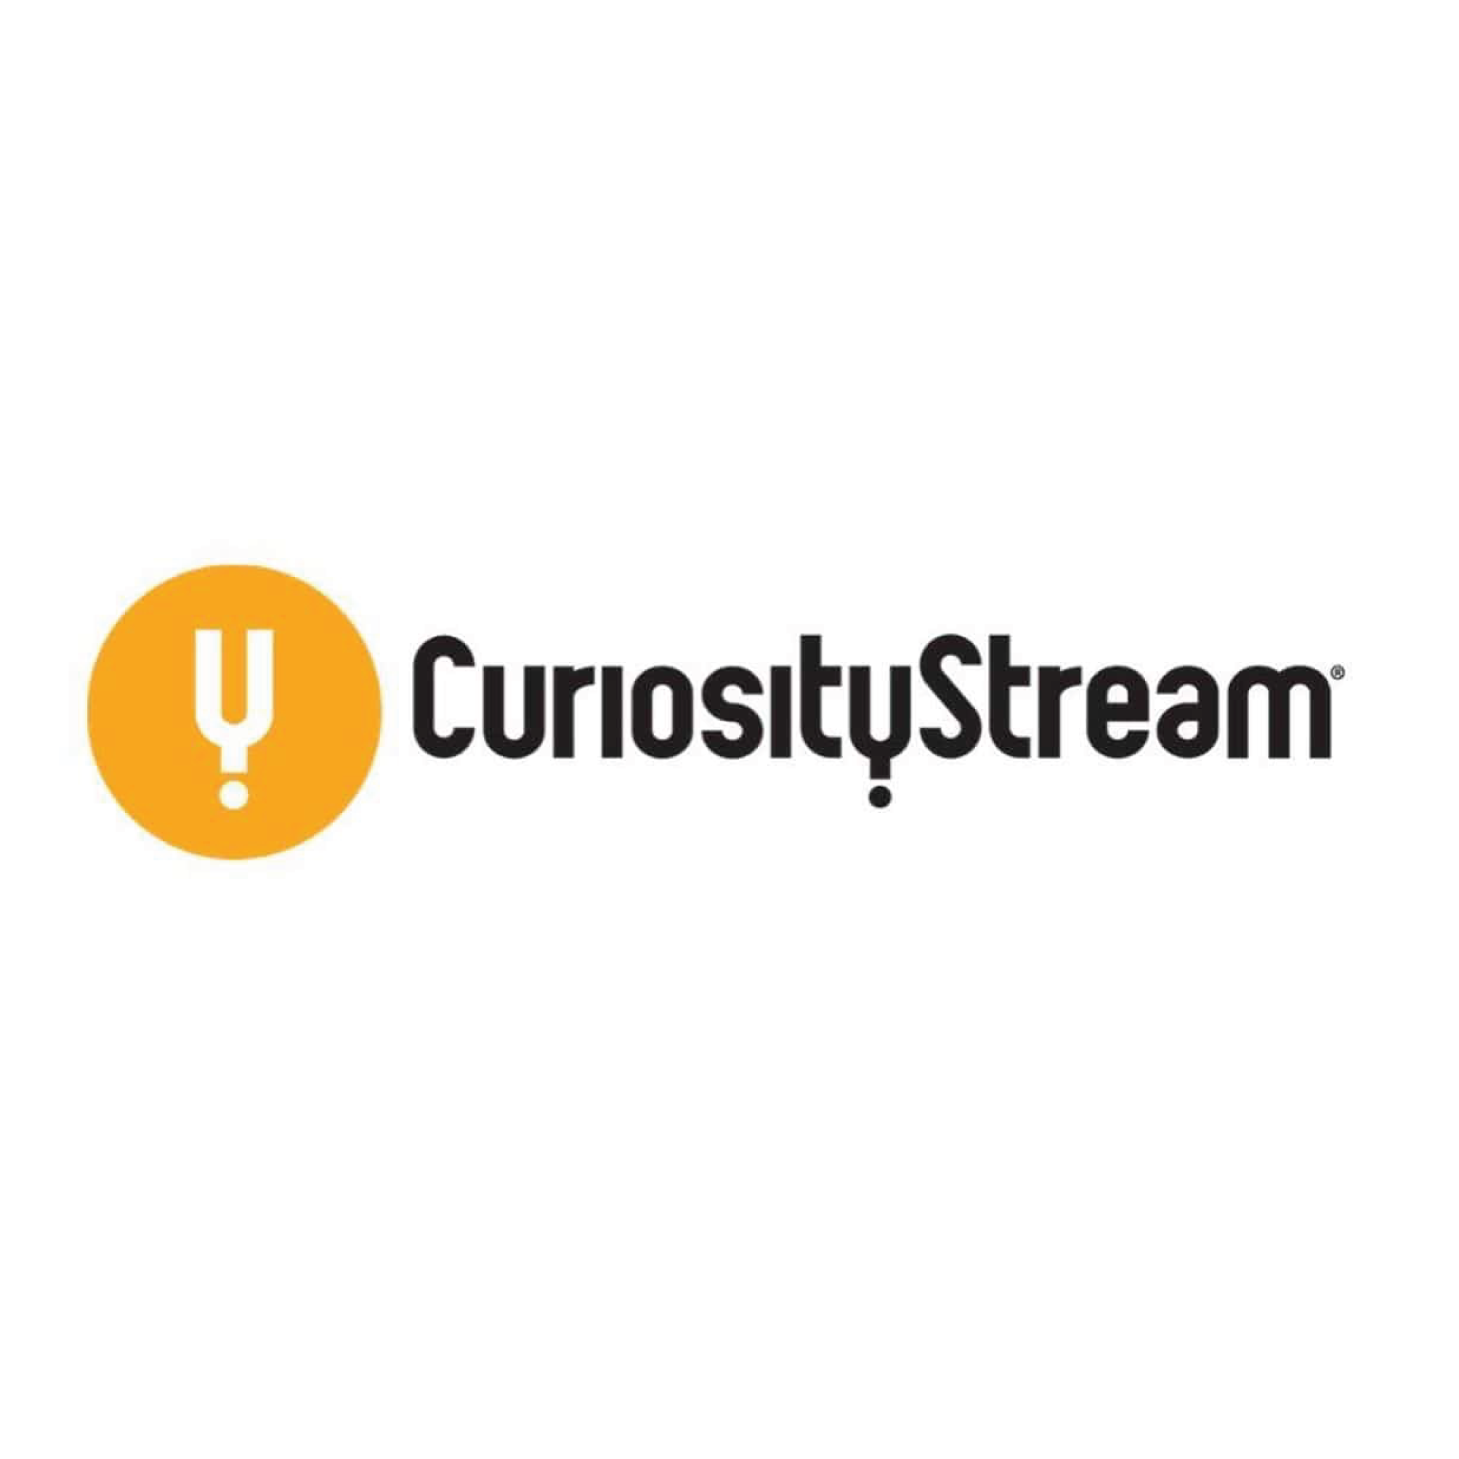 curiositystream.com